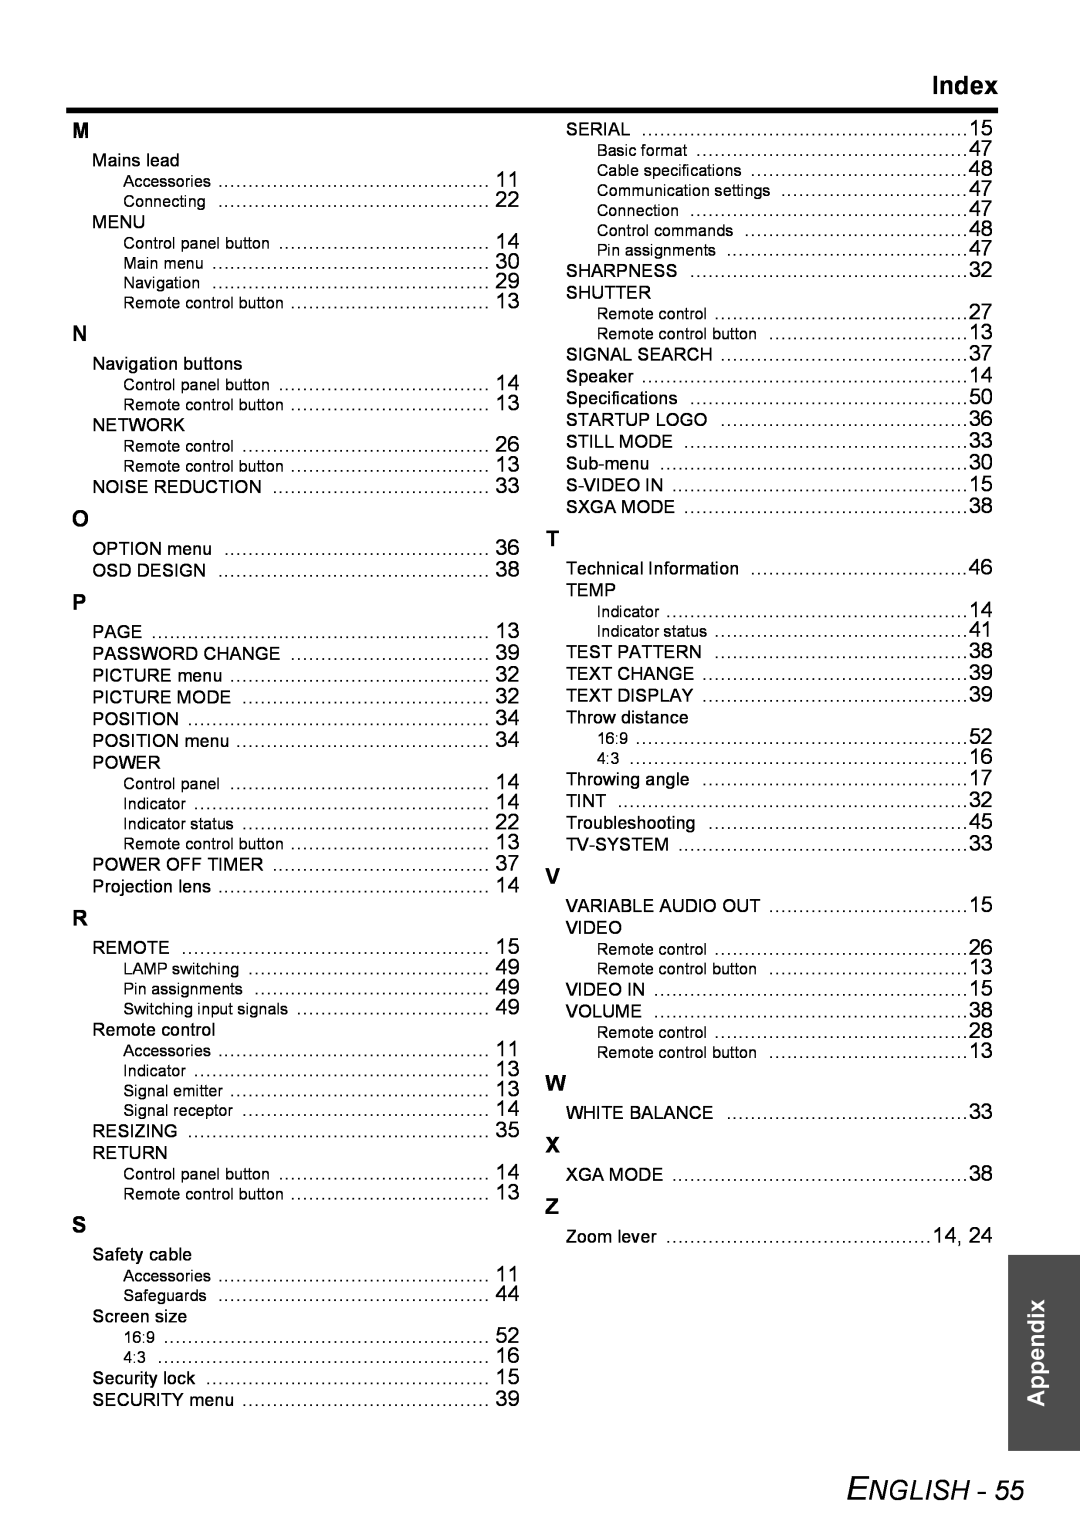 Philips PT-F100NTE manual Index, English, Appendix 